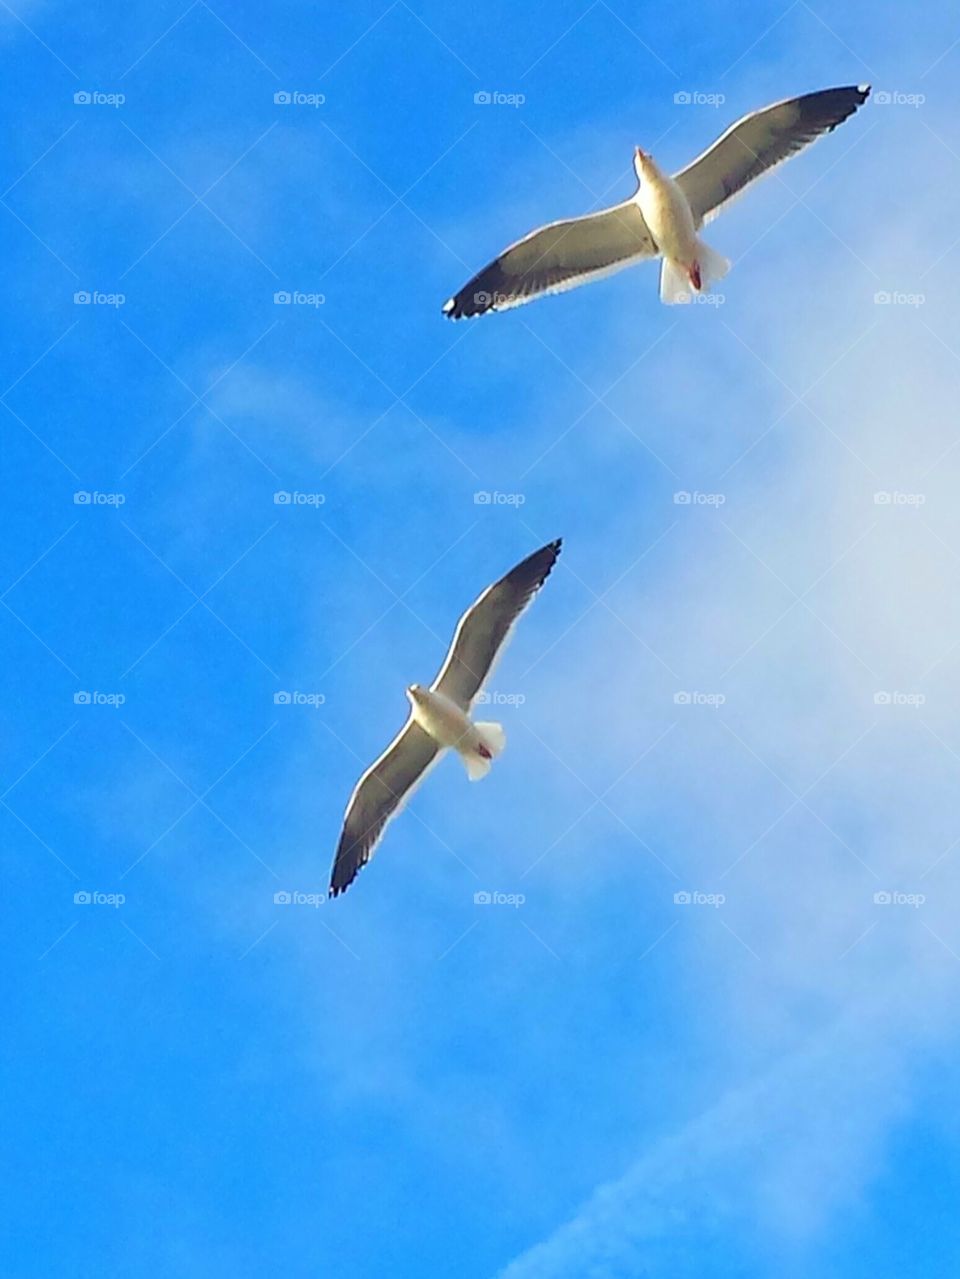 "Seagulls In Flight"